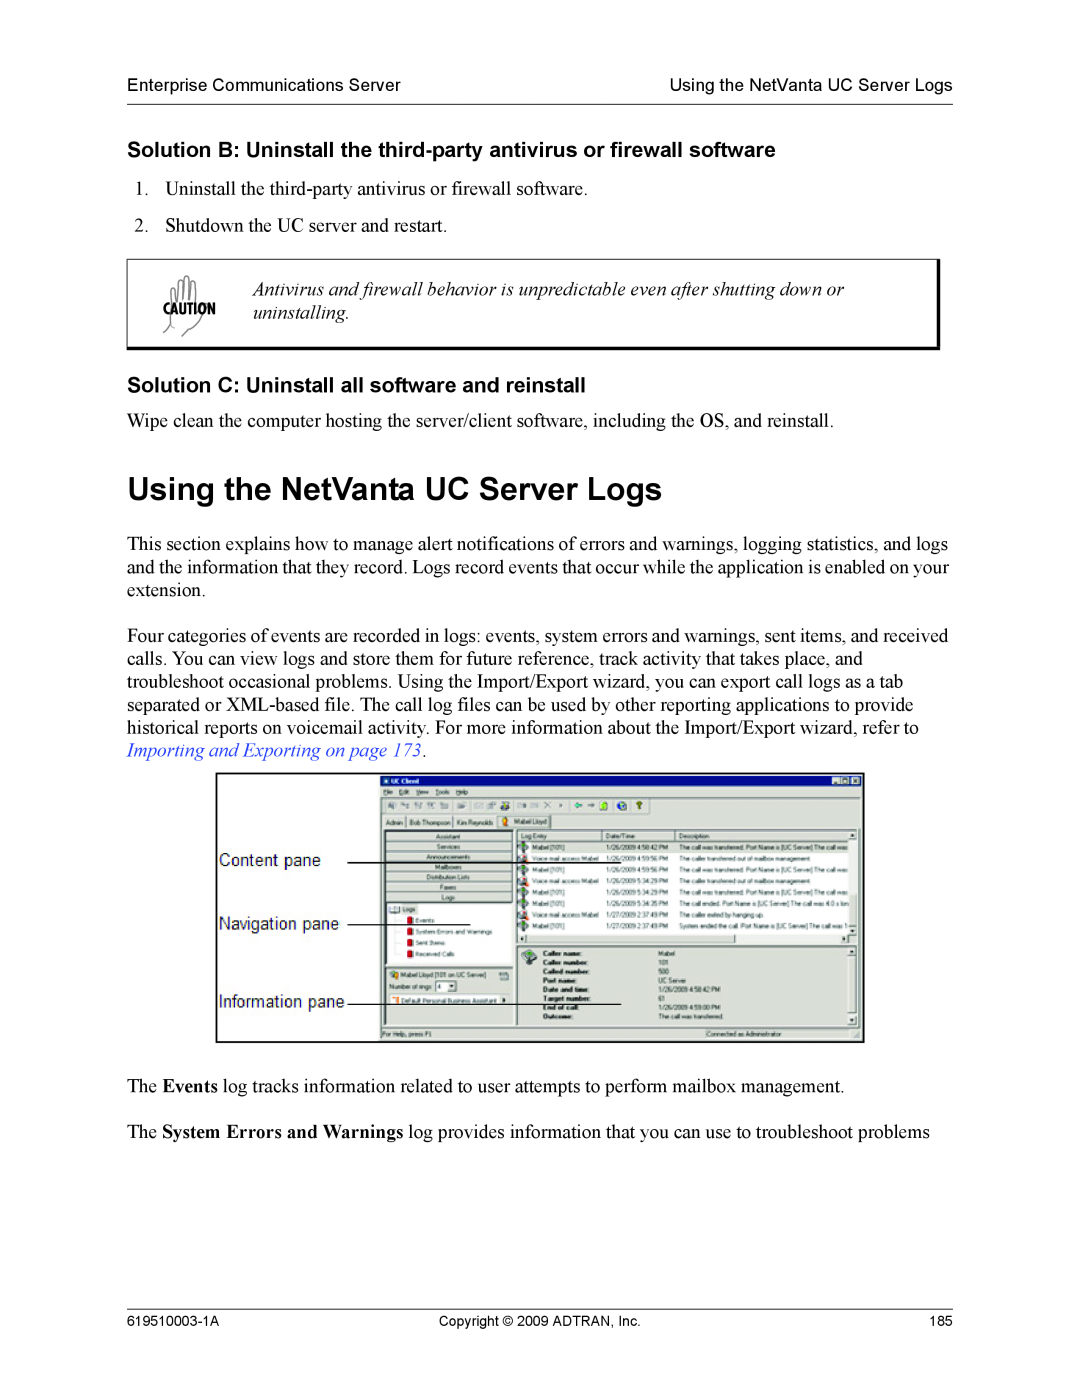 ADTRAN 619510003-1A Using the NetVanta UC Server Logs, Solution B Uninstall the third-party antivirus or firewall software 